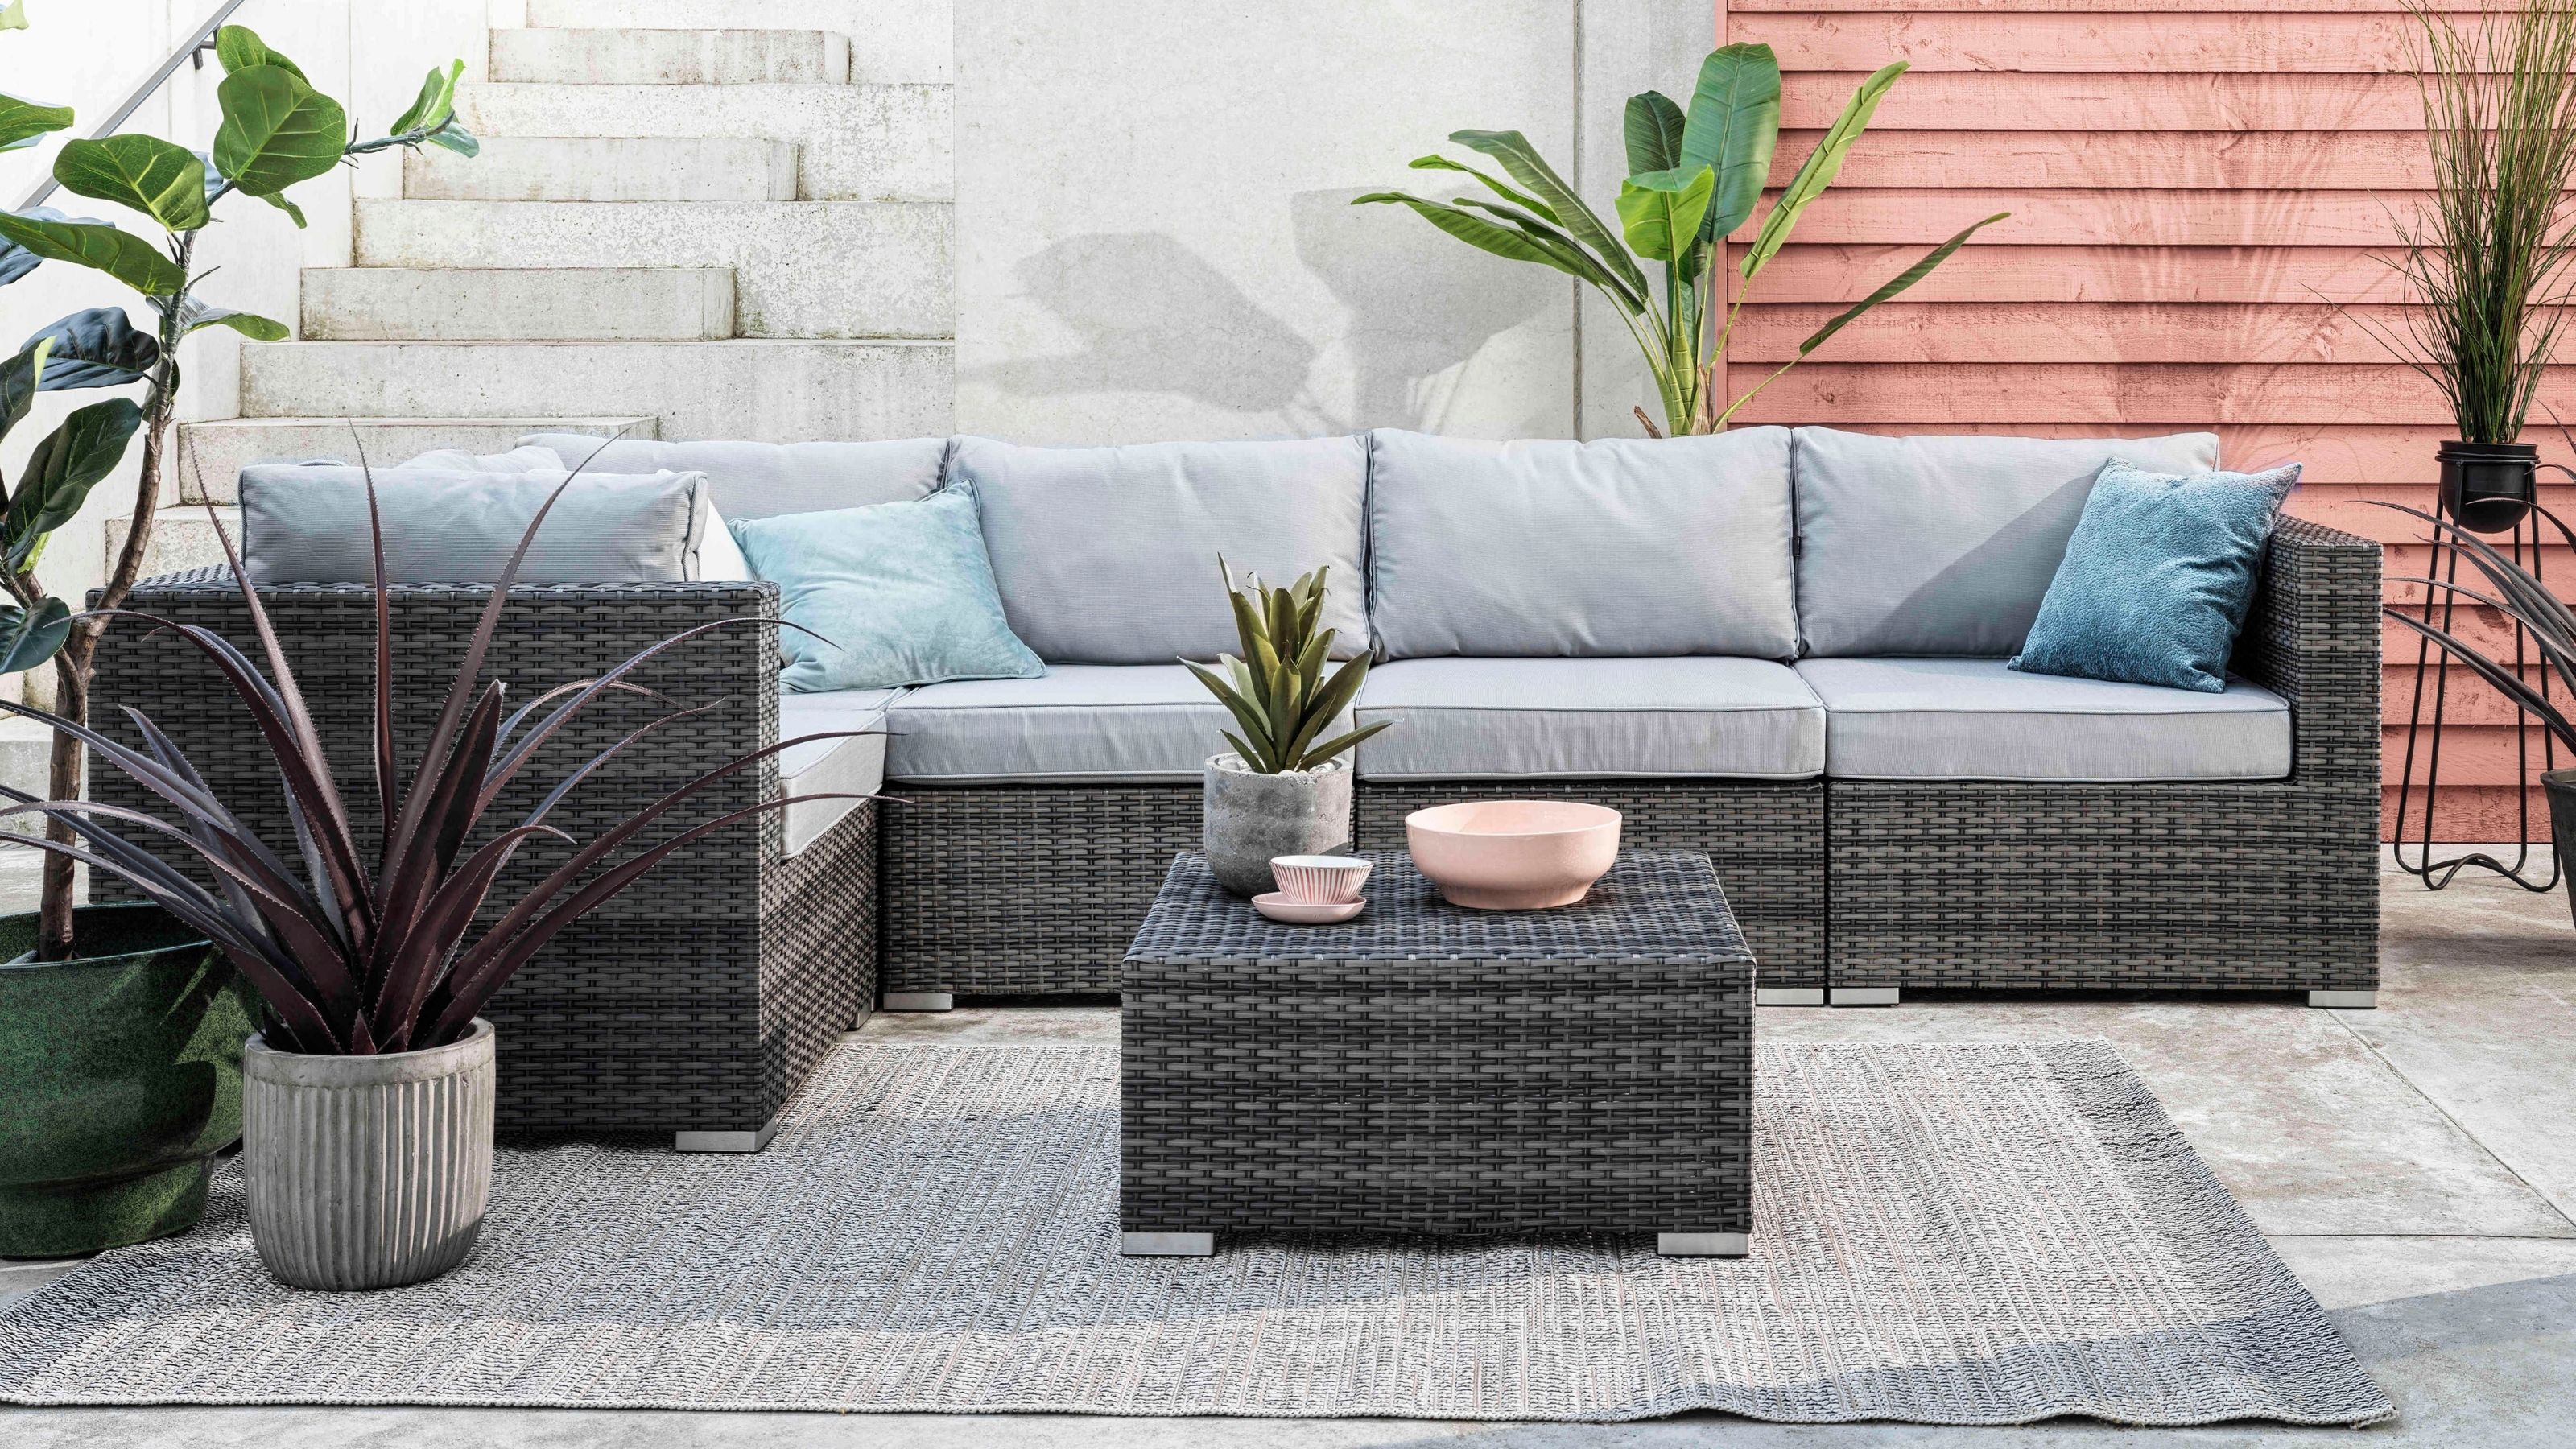 Black + Light Cushions Abreo Rattan Garden Corner Sofa And Table Patio Furniture Set